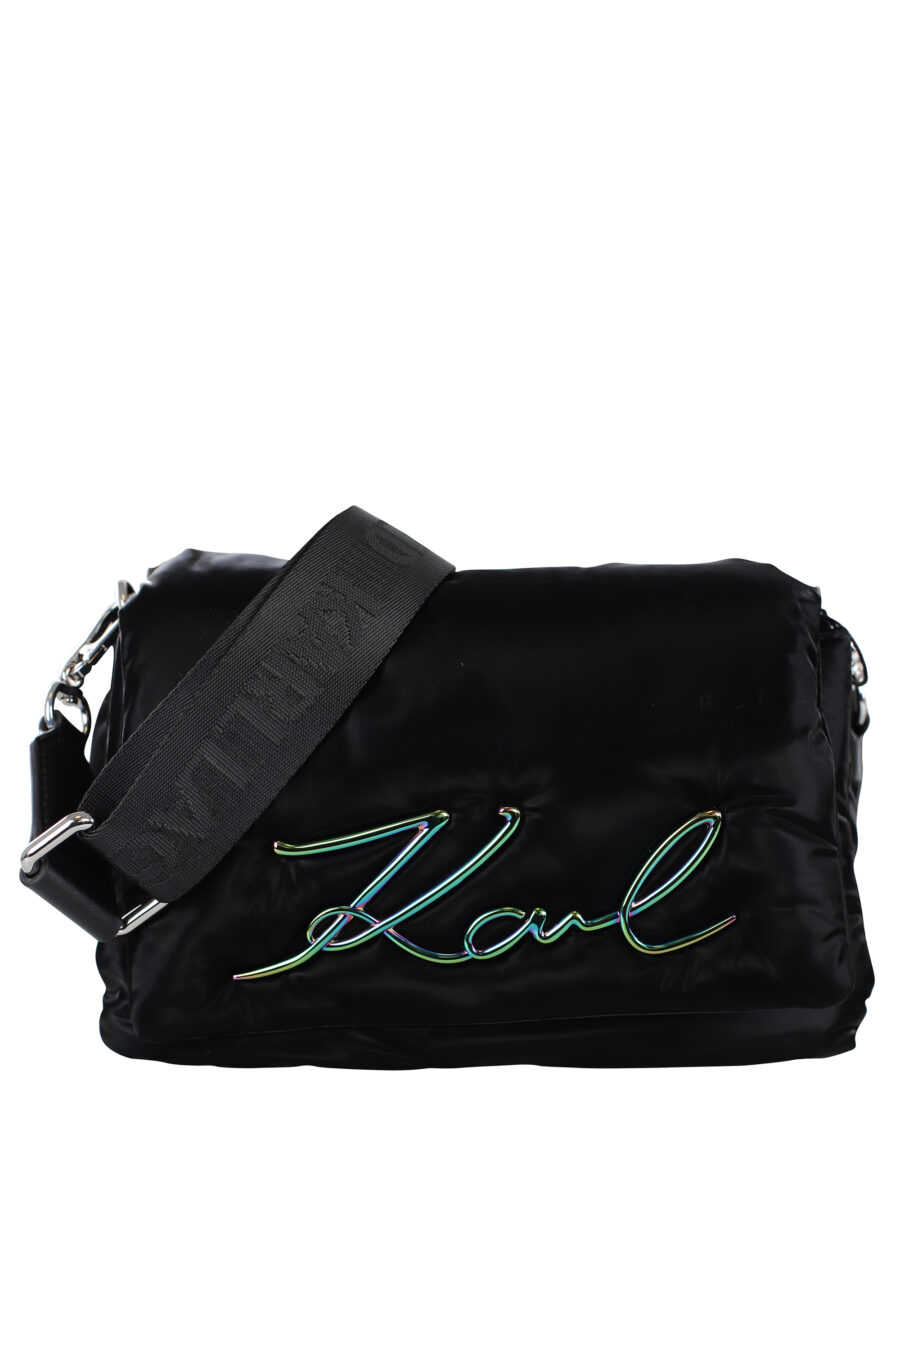 Mini shoulder bag black with autograph logo - IMG 6980